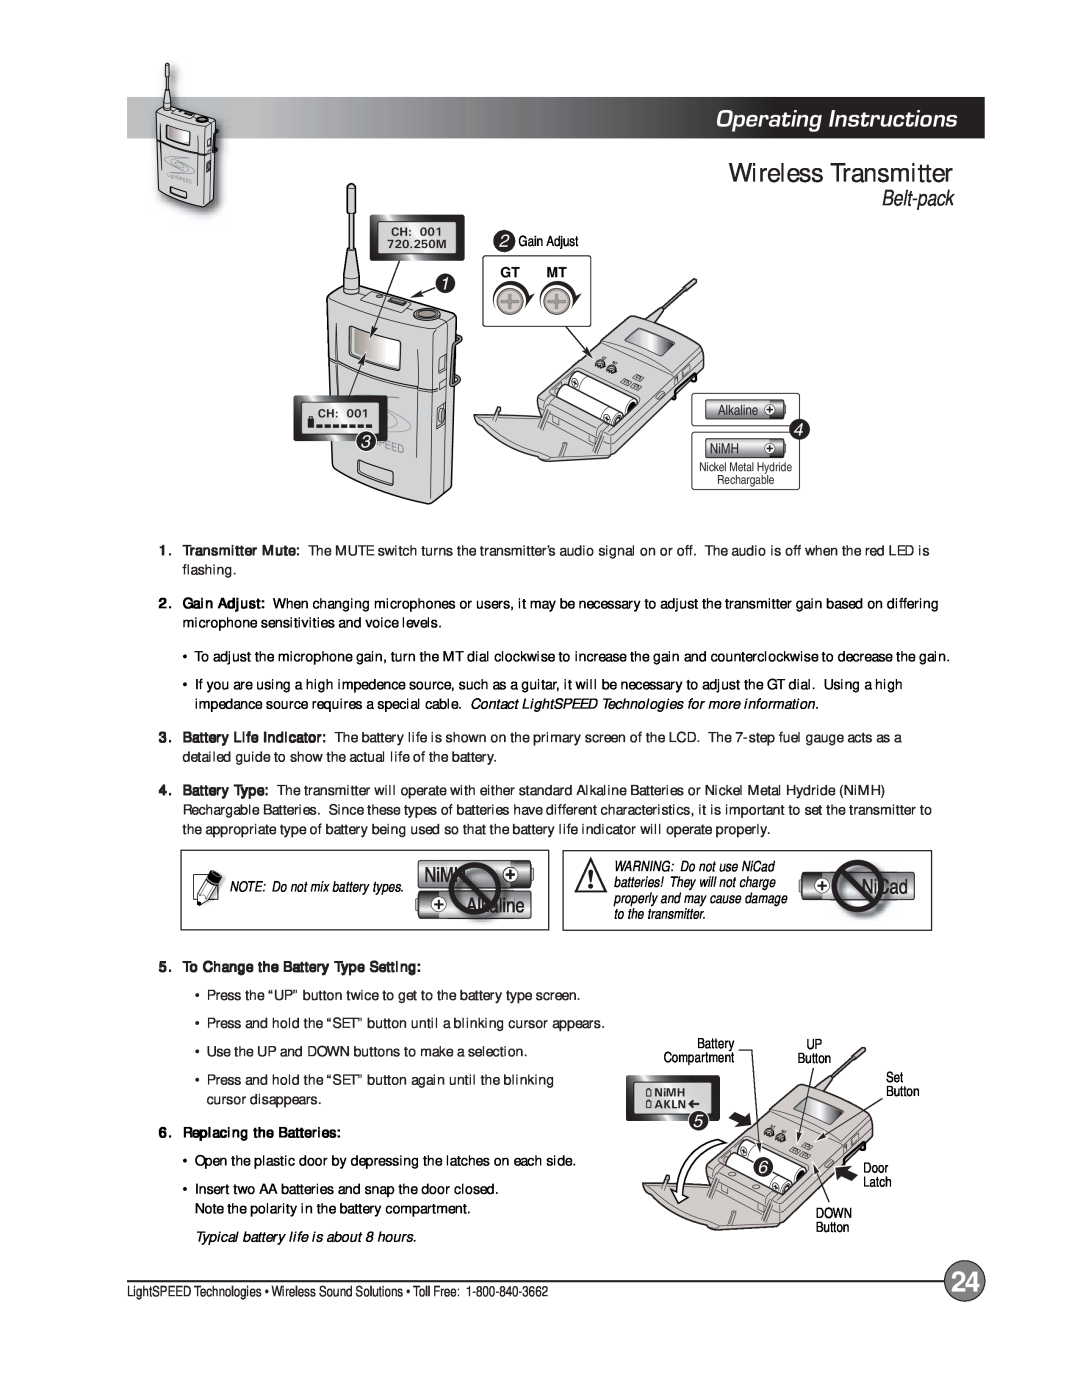 LightSpeed Technologies X12 Wireless Transmitter, Operating Instructions, Belt-pack, To Change the Battery Type Setting 